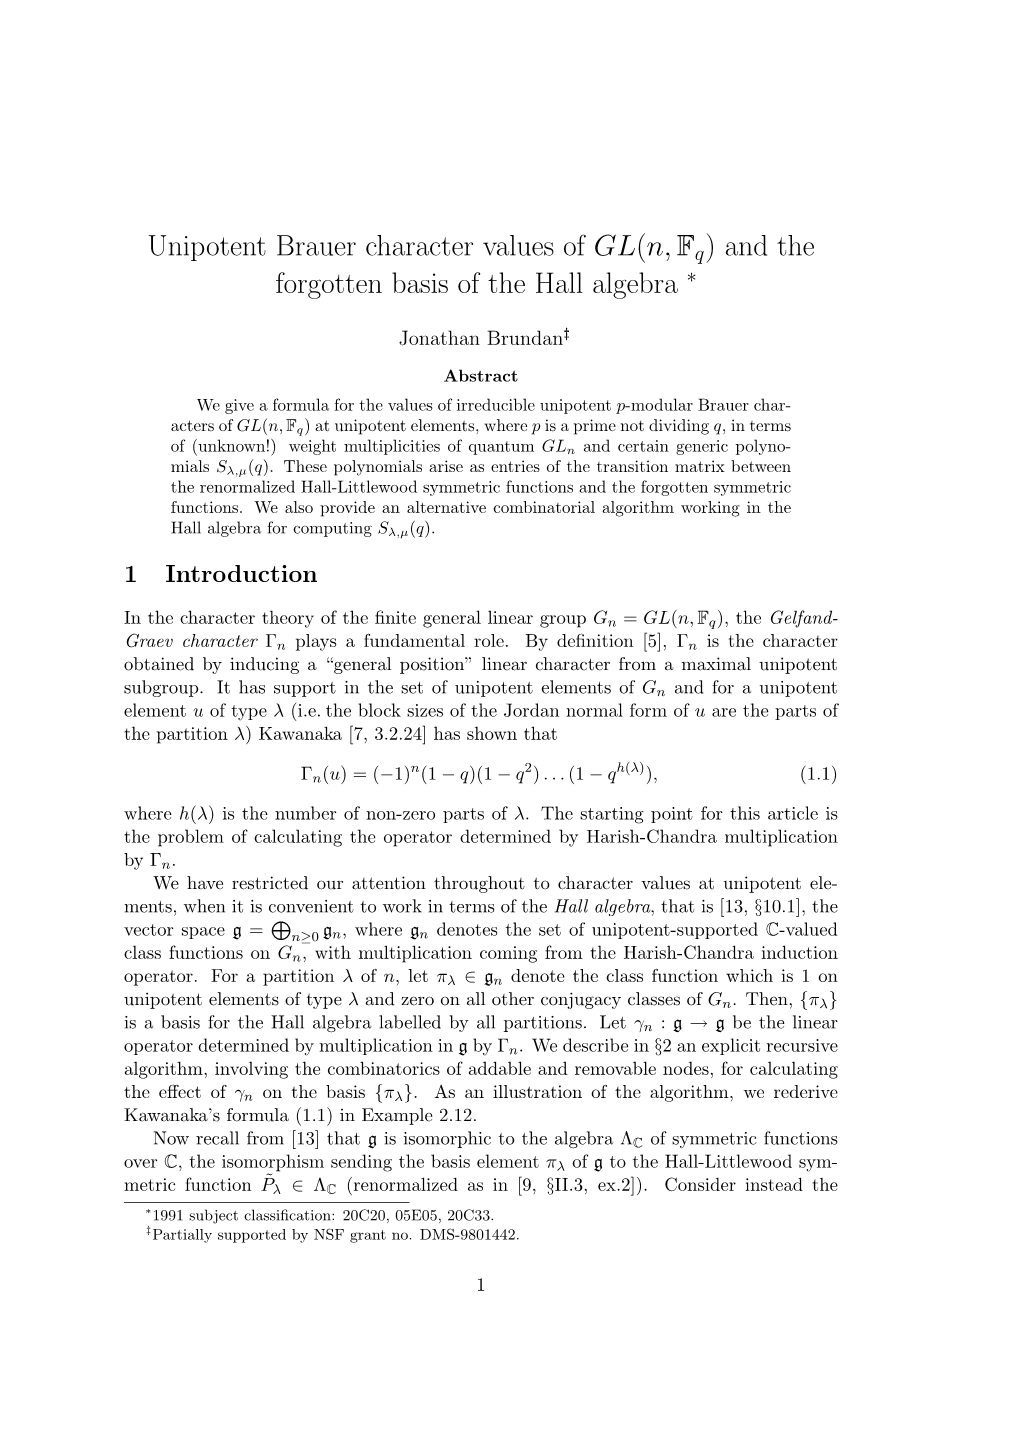 Unipotent Brauer Character Values of GL(N,F Q)